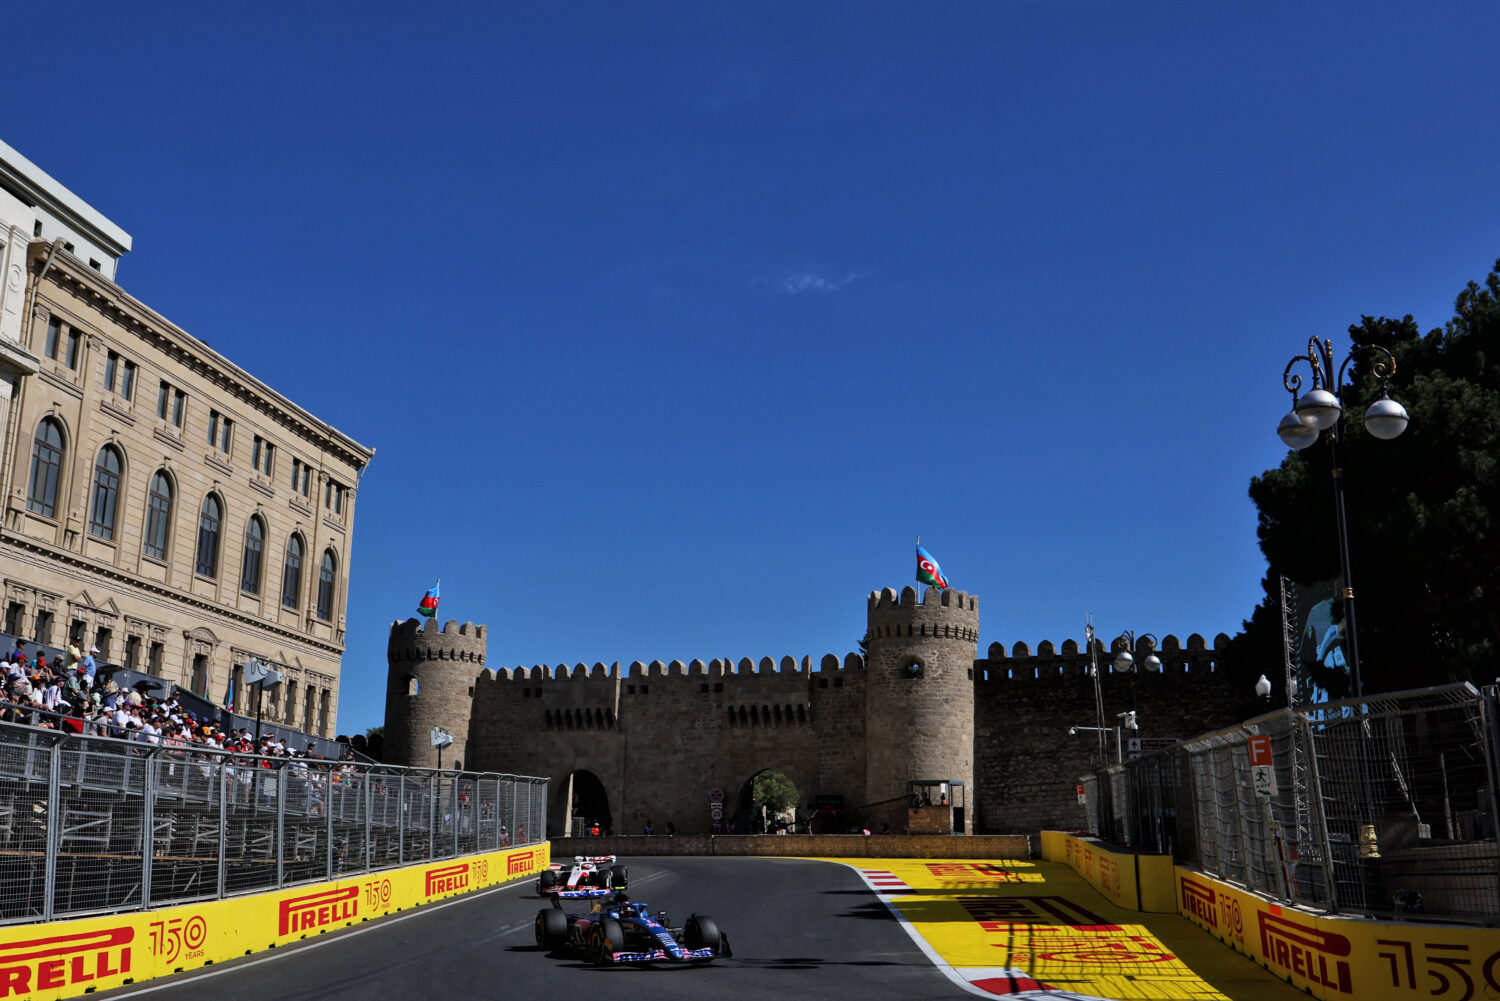 6-2022 Azerbaijan Grand Prix, Sunday